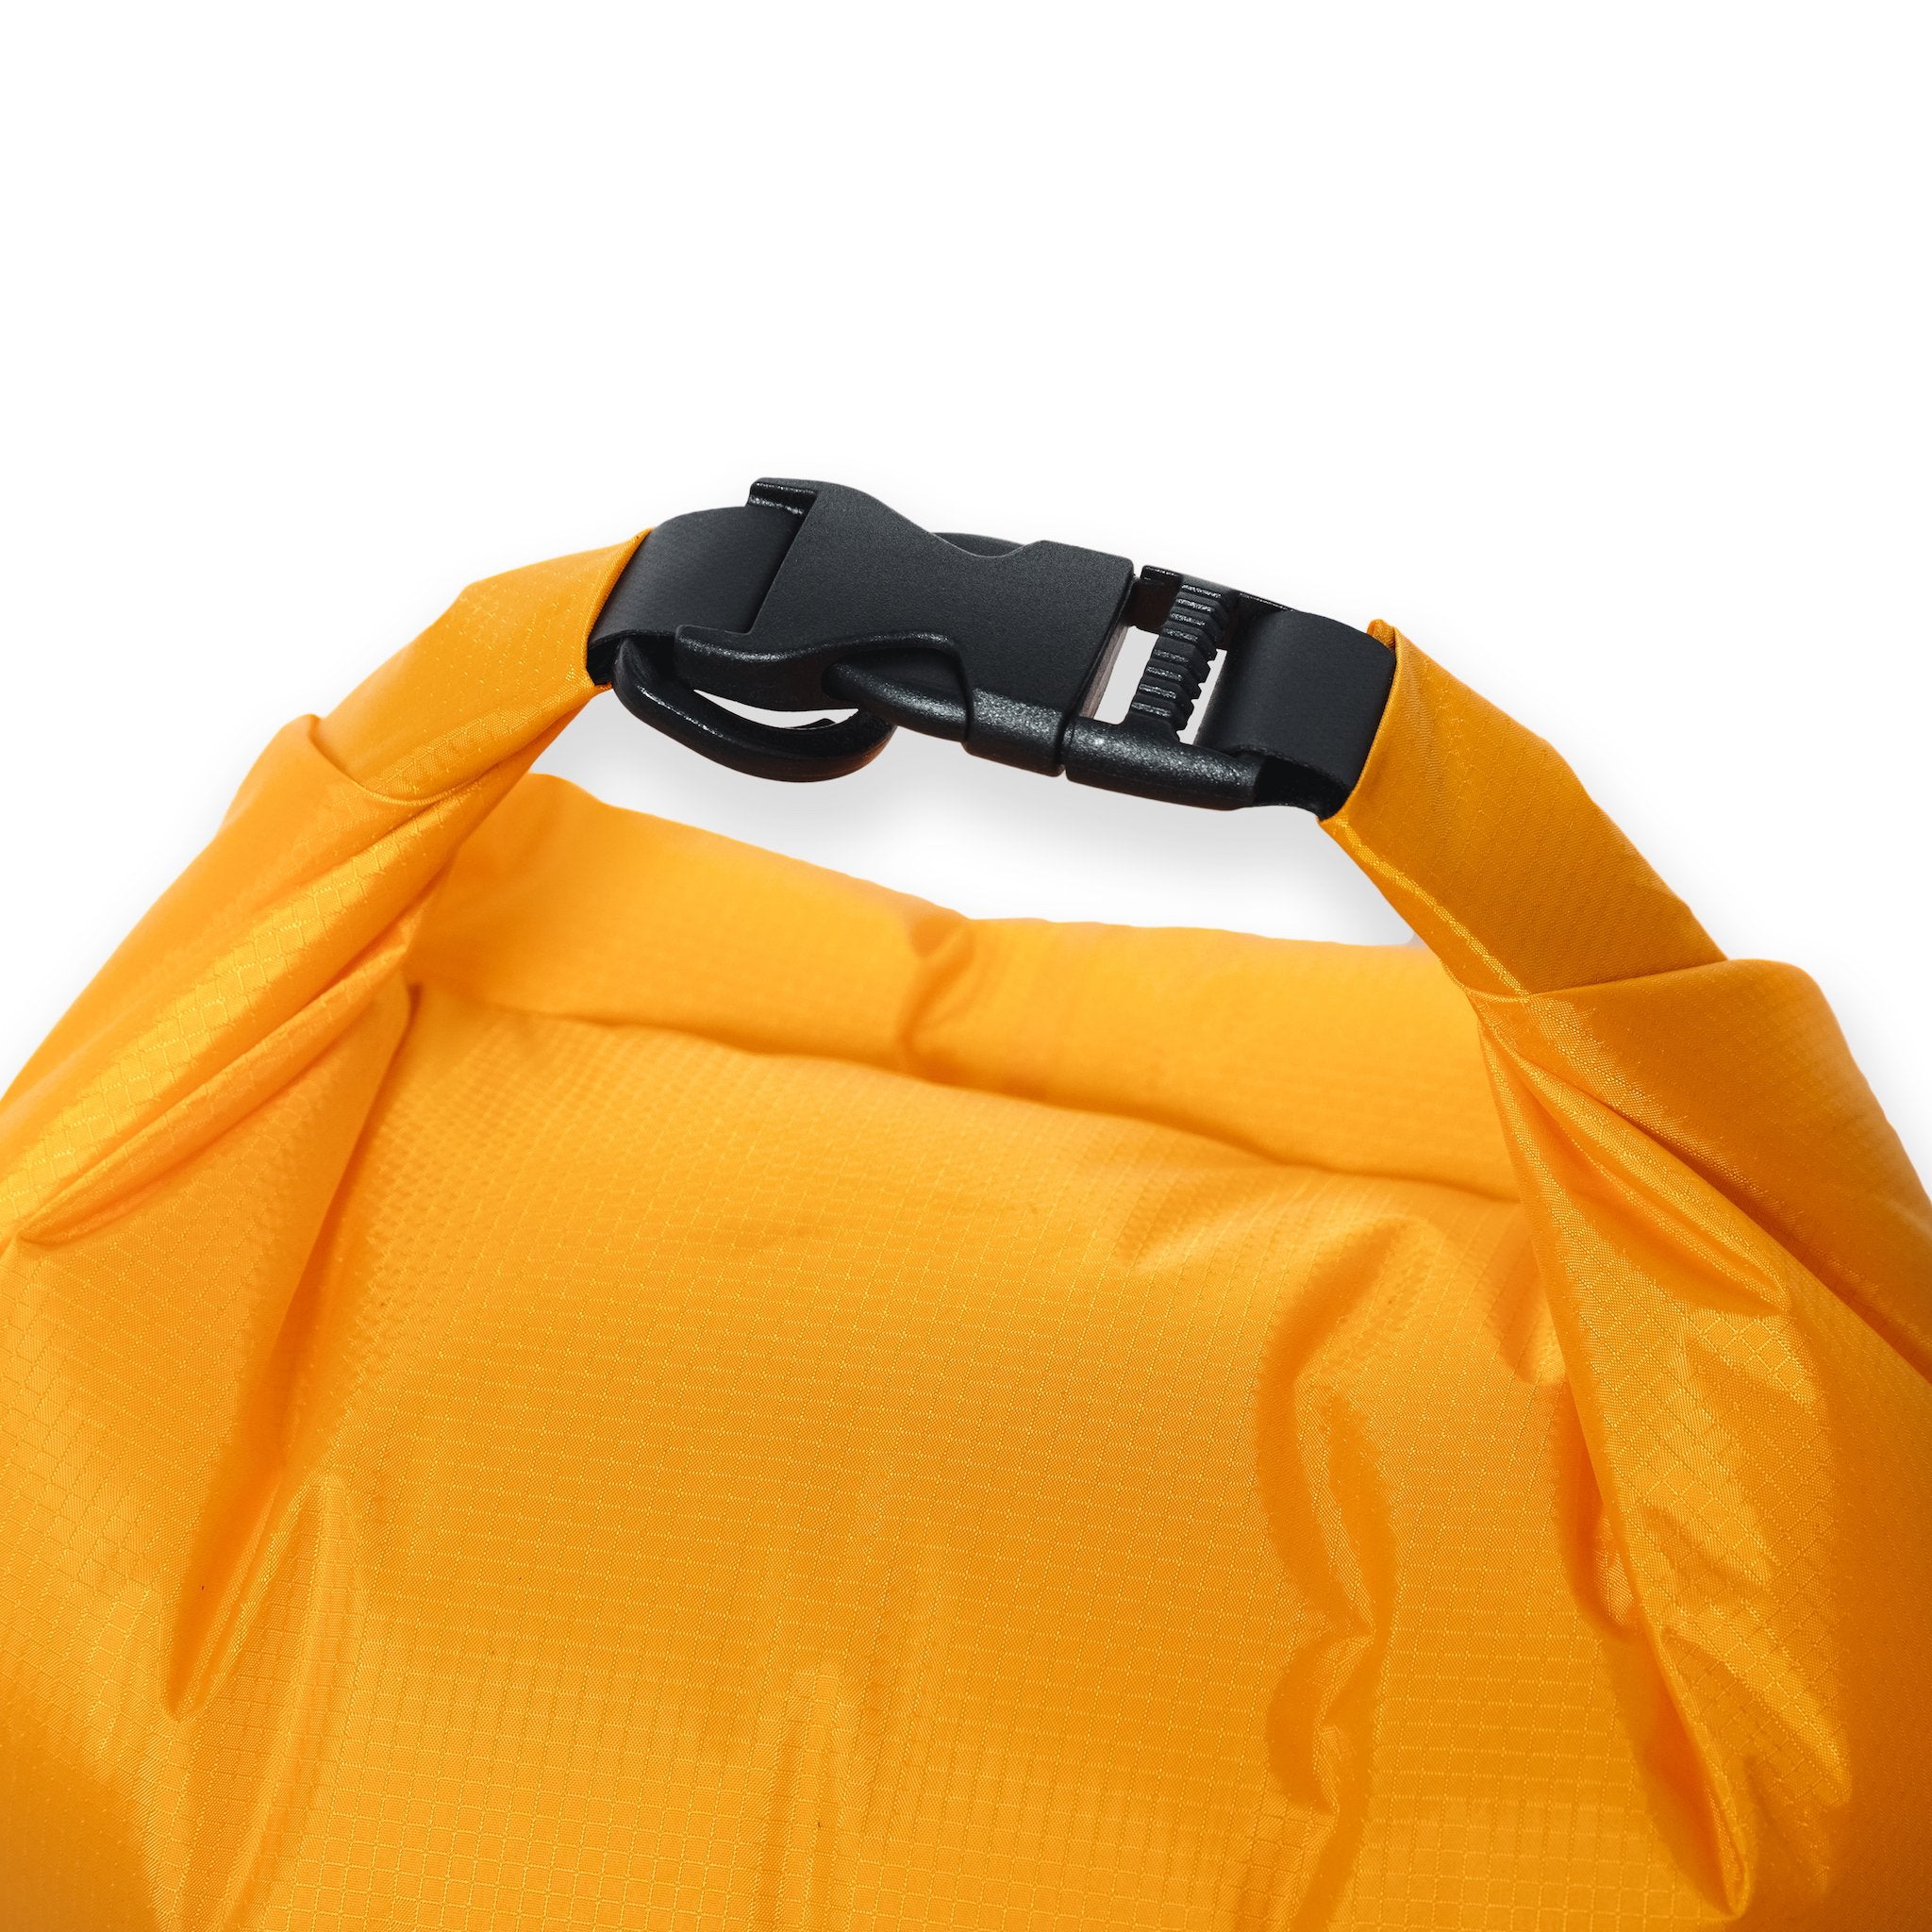 PP Woven Sack Bag Price-120/Kilograms,PP Woven Sack Bag  Manufacturer,Supplier